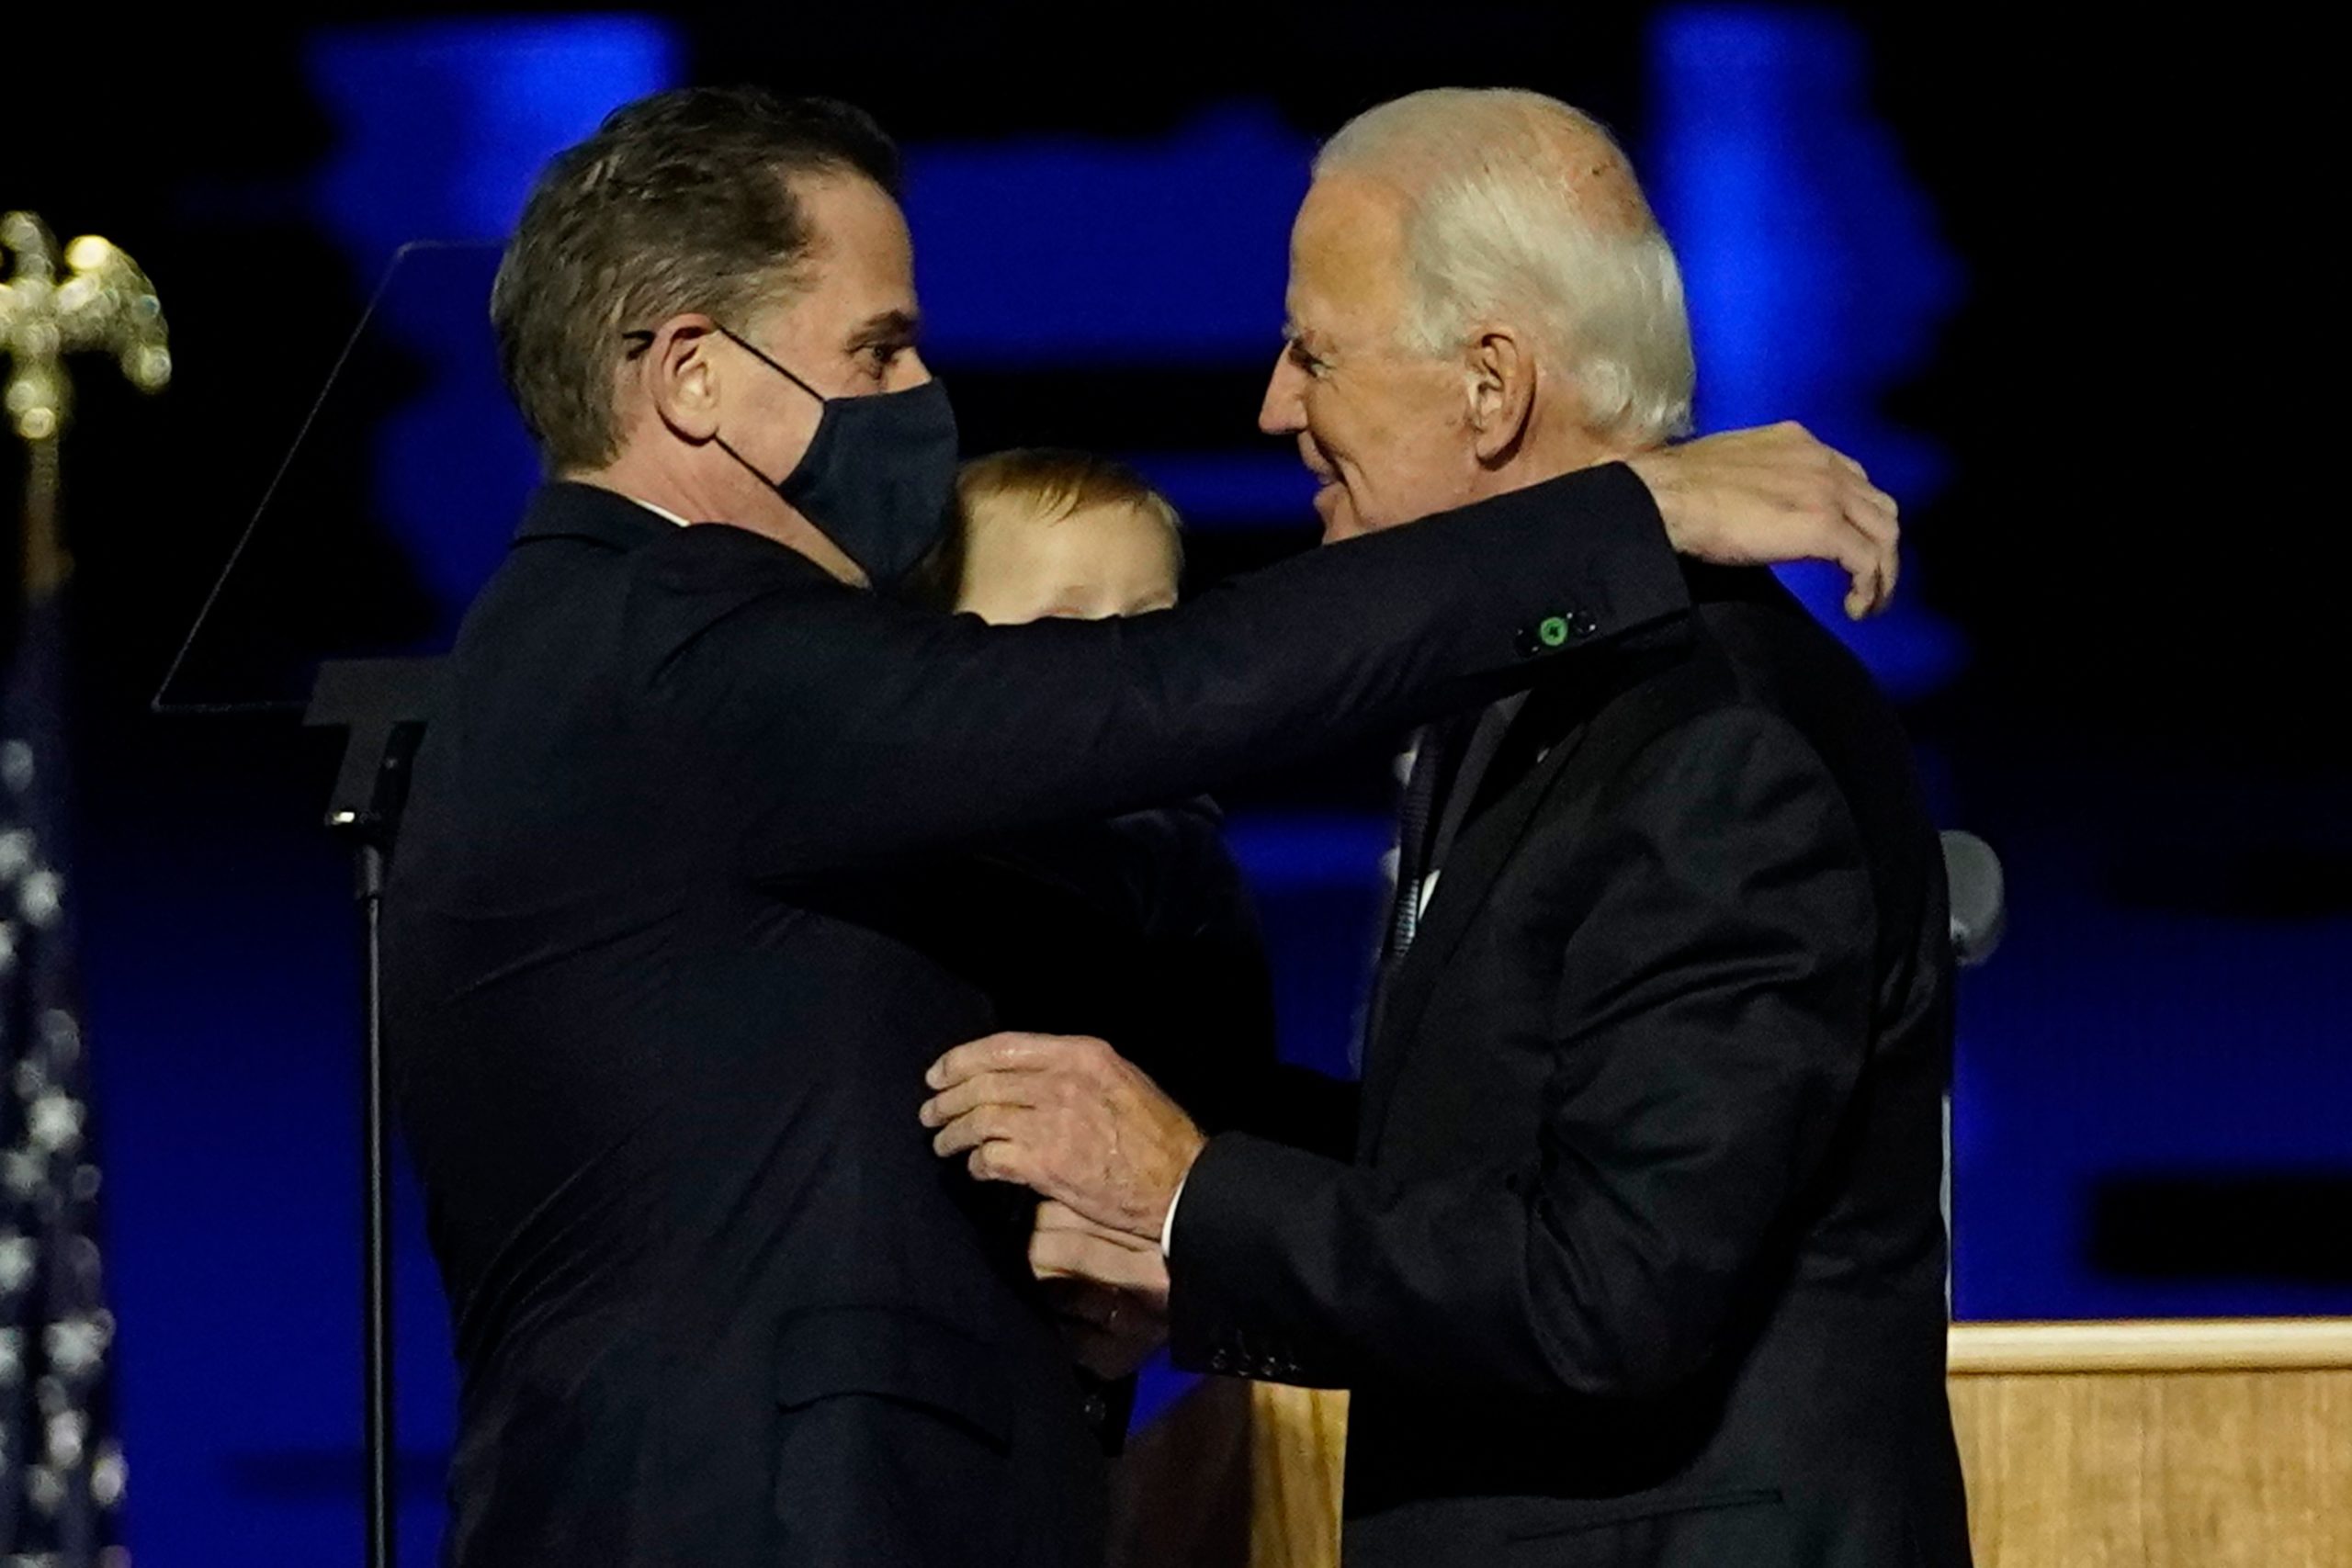 US President-elect Joe Biden (R) embraces his son Hunter Biden (L) on stage after delivering remarks in Wilmington, Delaware, on November 7, 2020. (Photo by Andrew Harnik / POOL / AFP) (Photo by ANDREW HARNIK/POOL/AFP via Getty Images)